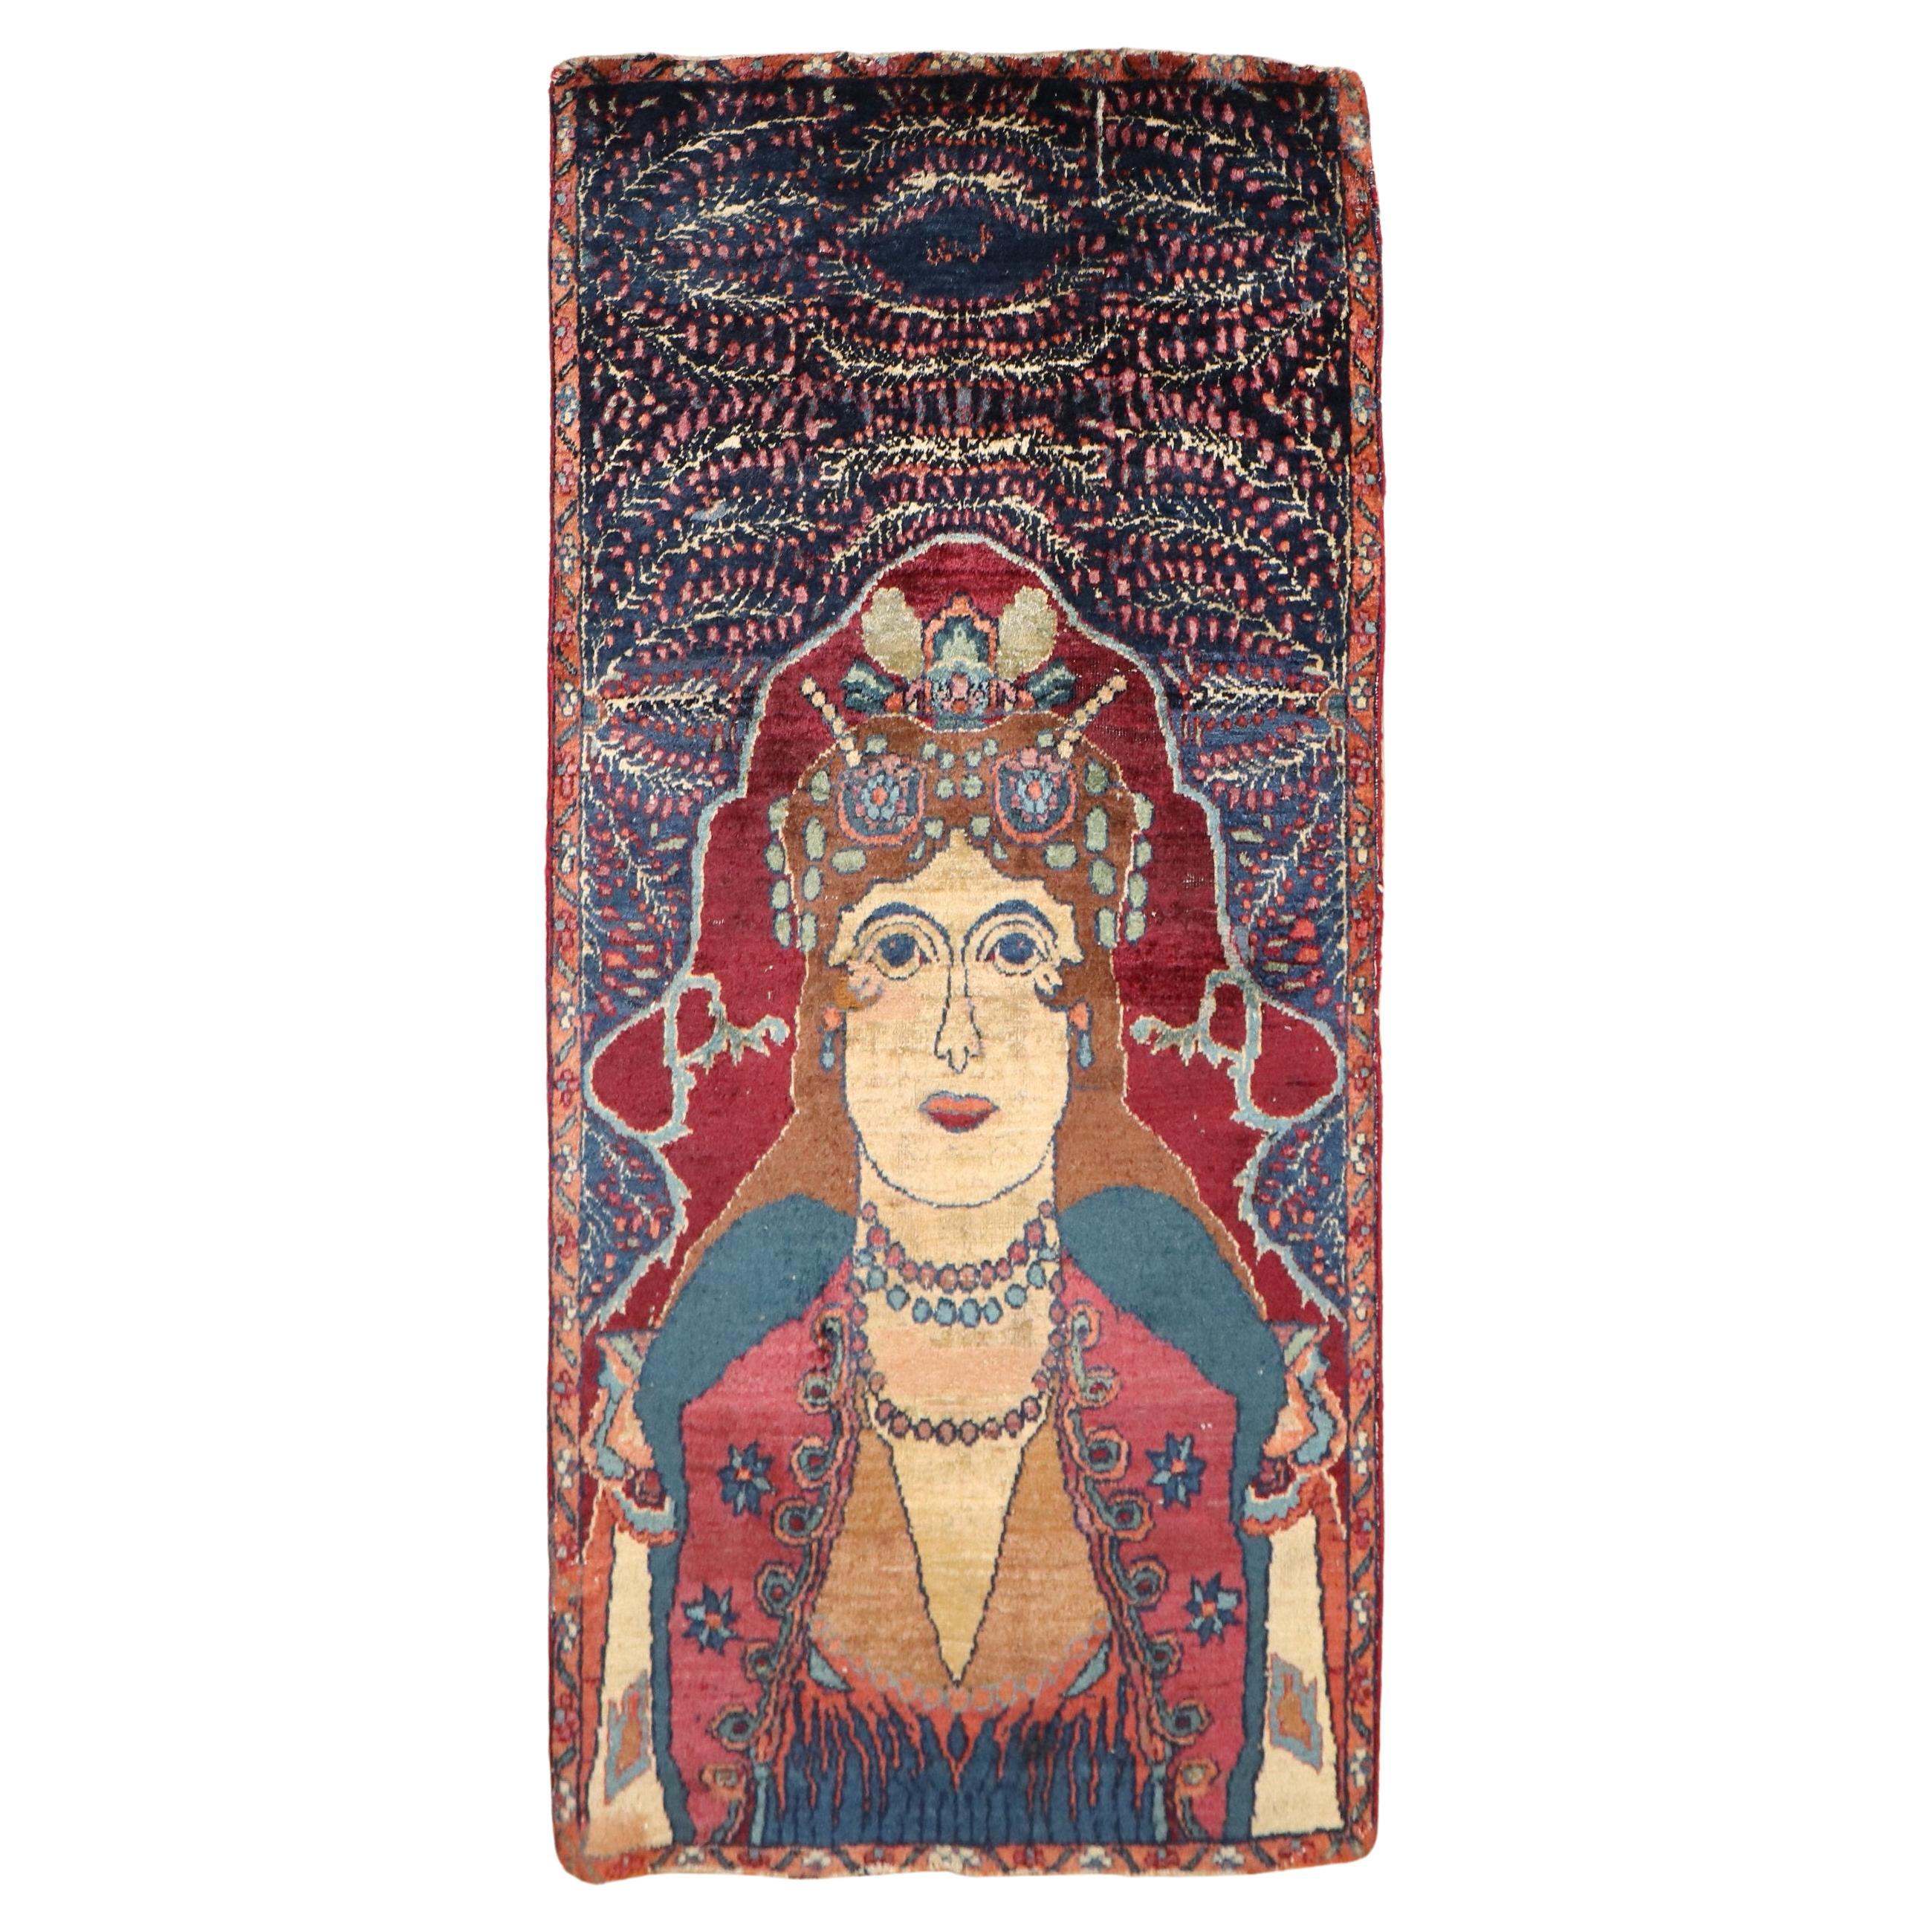 Zabihi Kollektion Göttin Königin Persischer malerischer Teppich